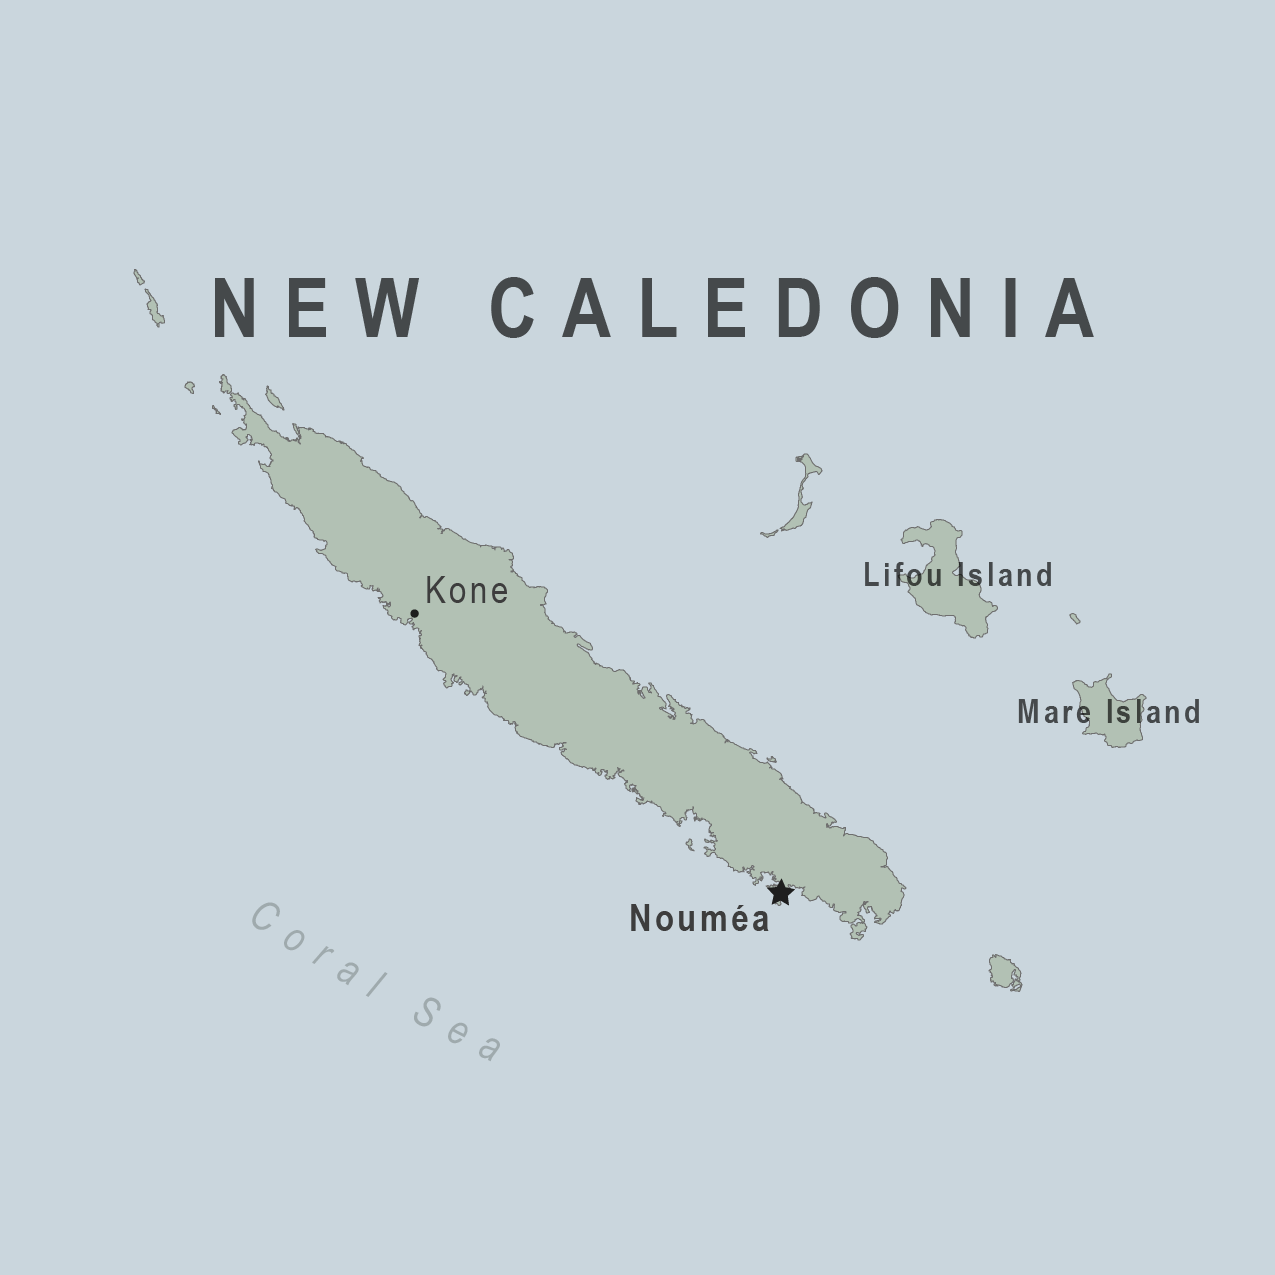 New Caledonia Travel Insurance Requirement  